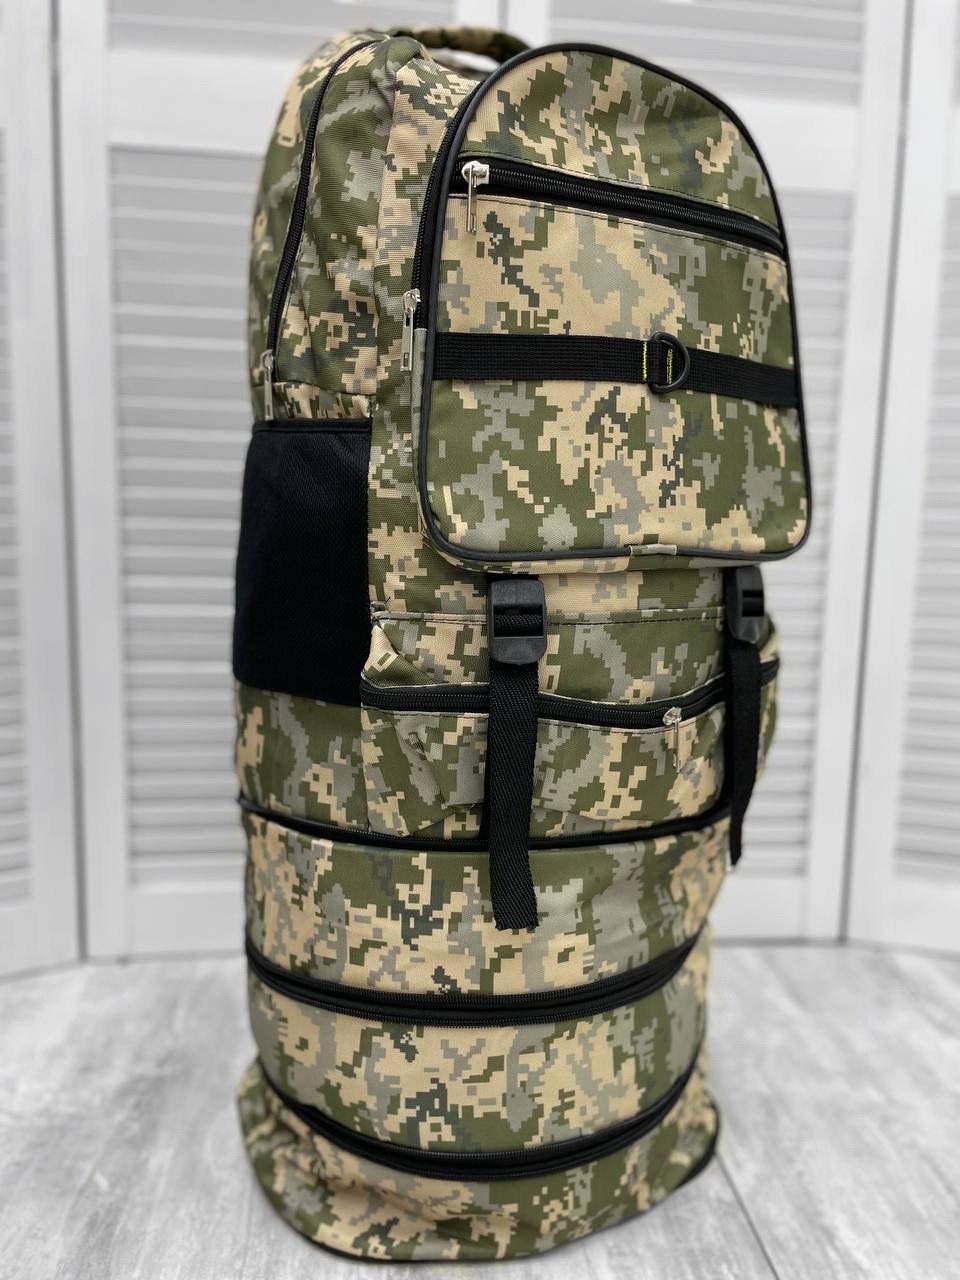 Баул армейский, Баул рюкзак, сумка-баул тактическая, баул военный, баул зсу, Баул 75 литров камуфляж